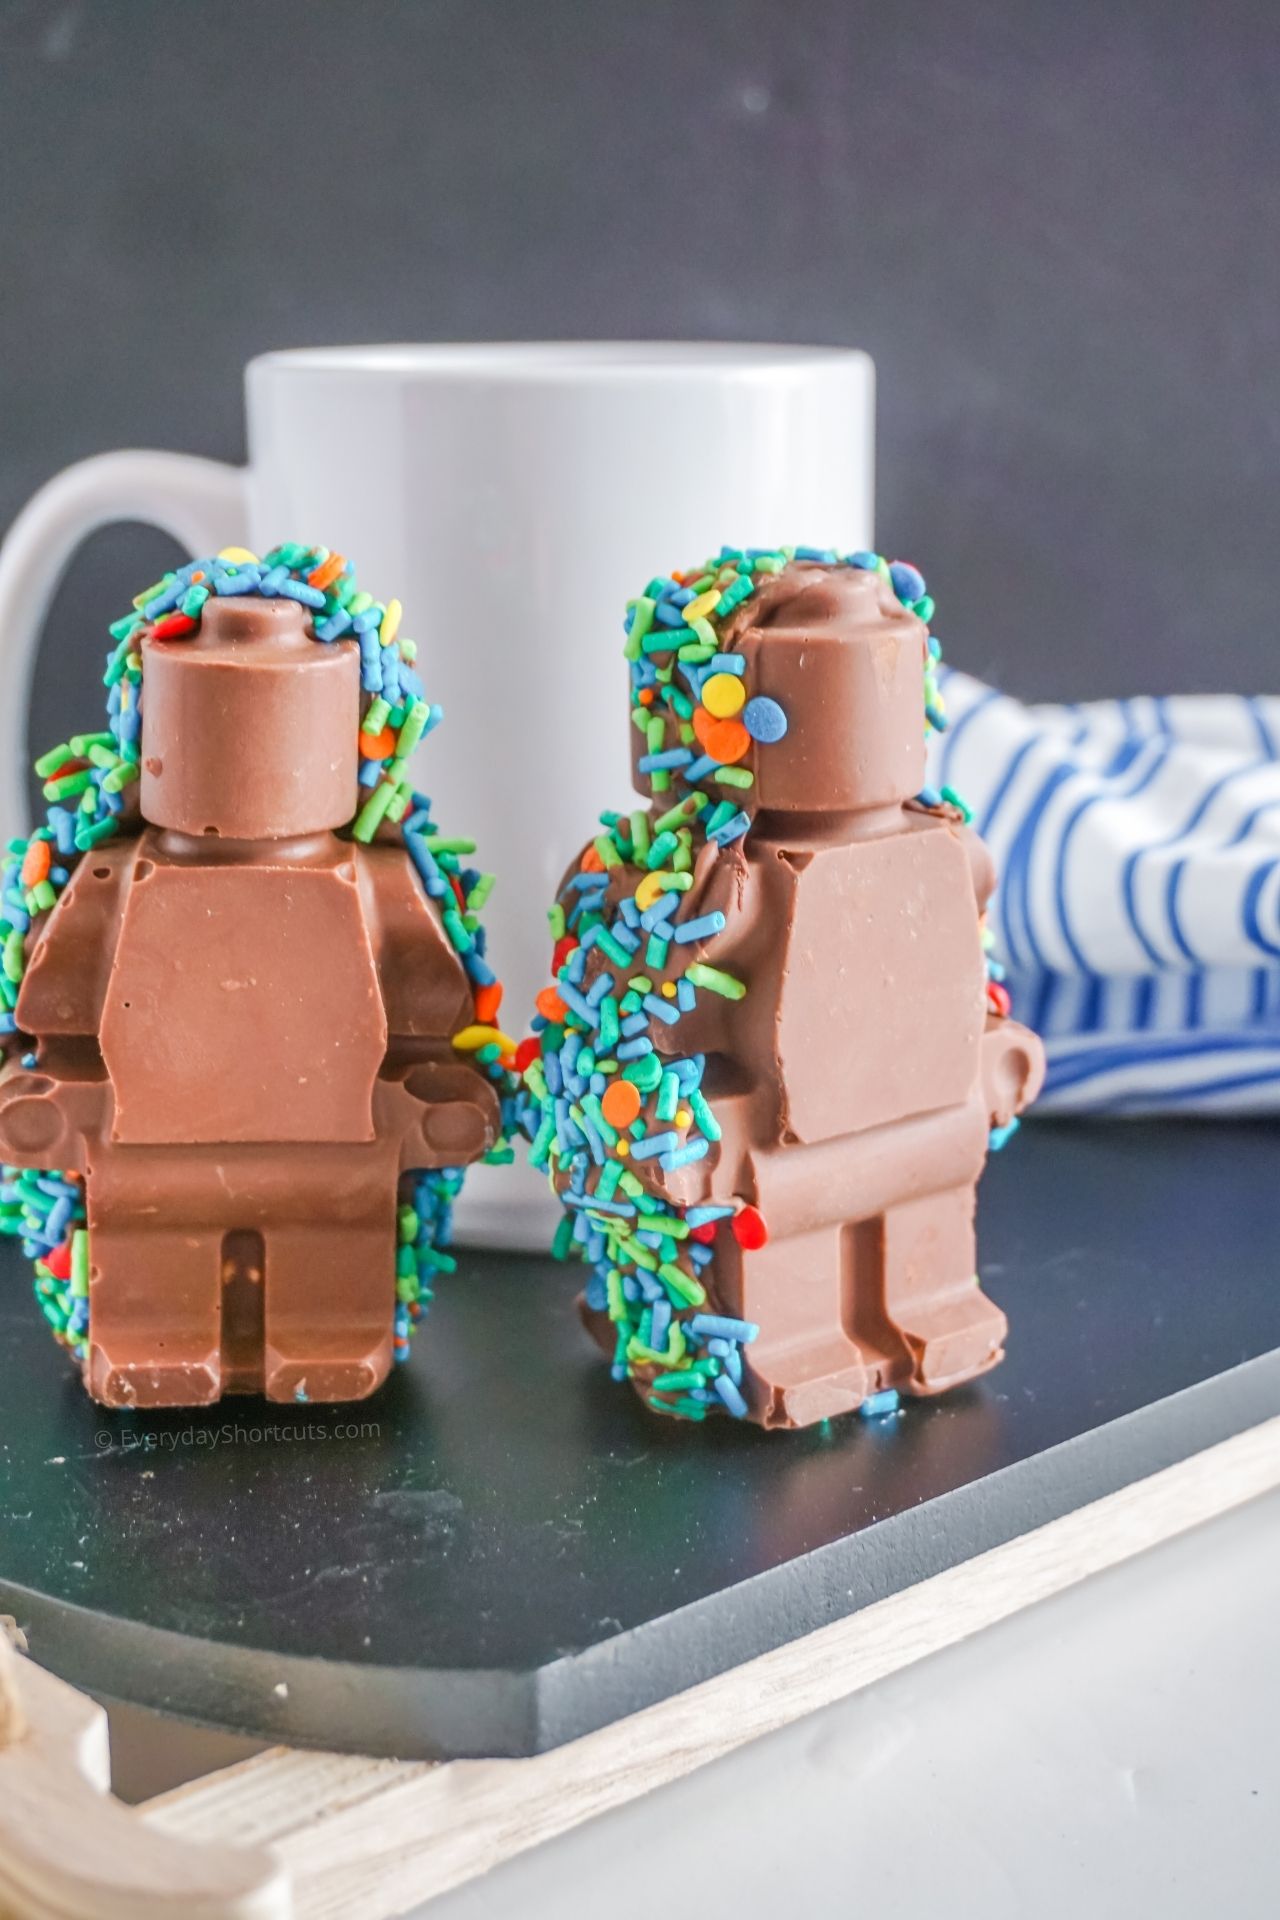 Lego Man Hot Chocolate Bombs